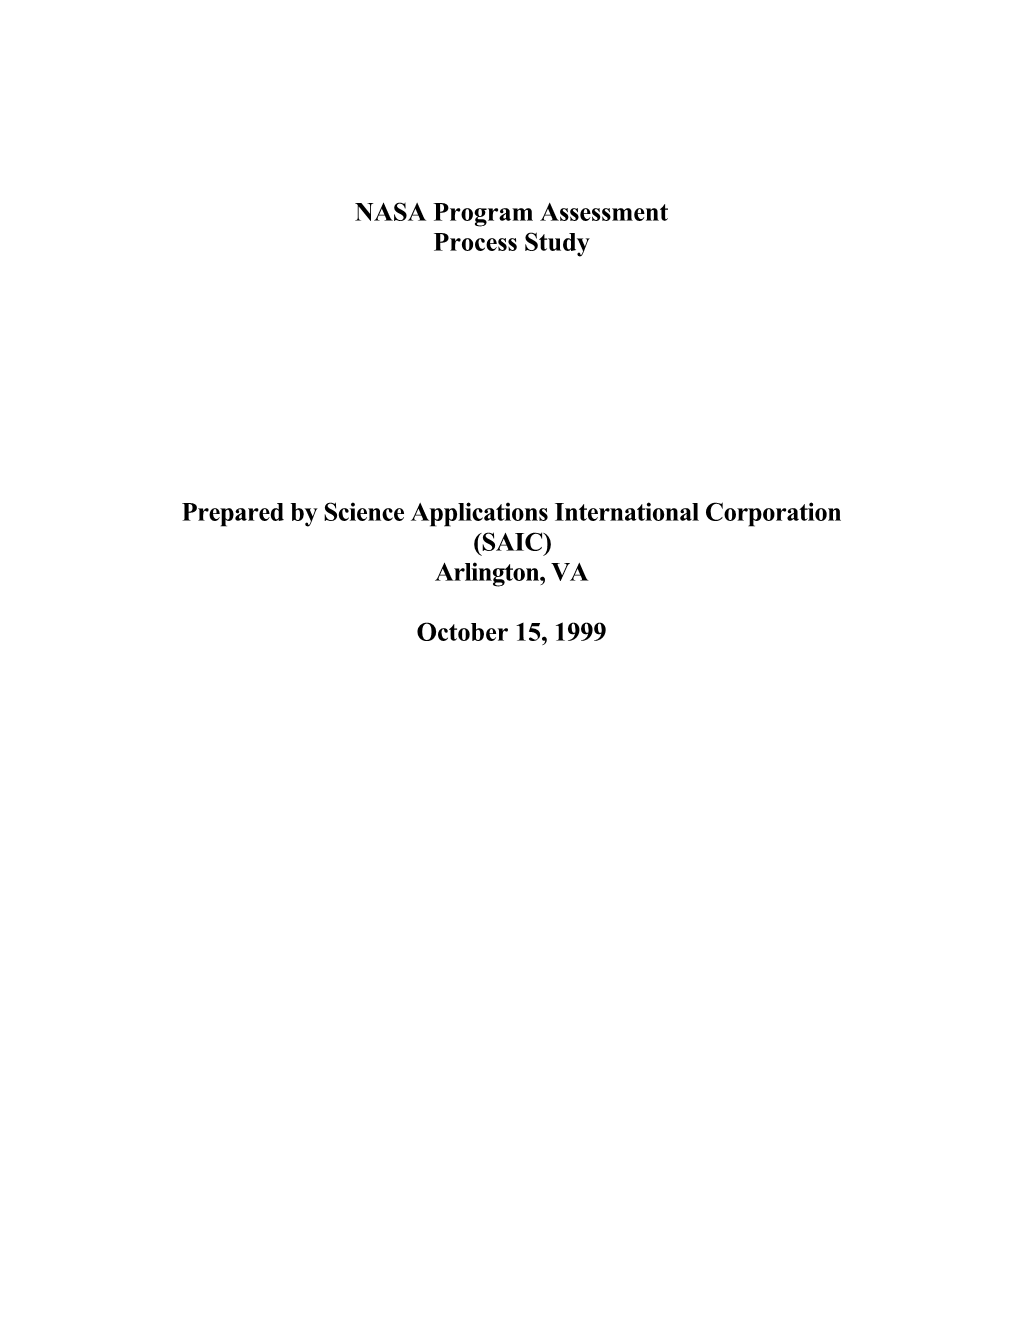 NASA Program Assessment Process Study